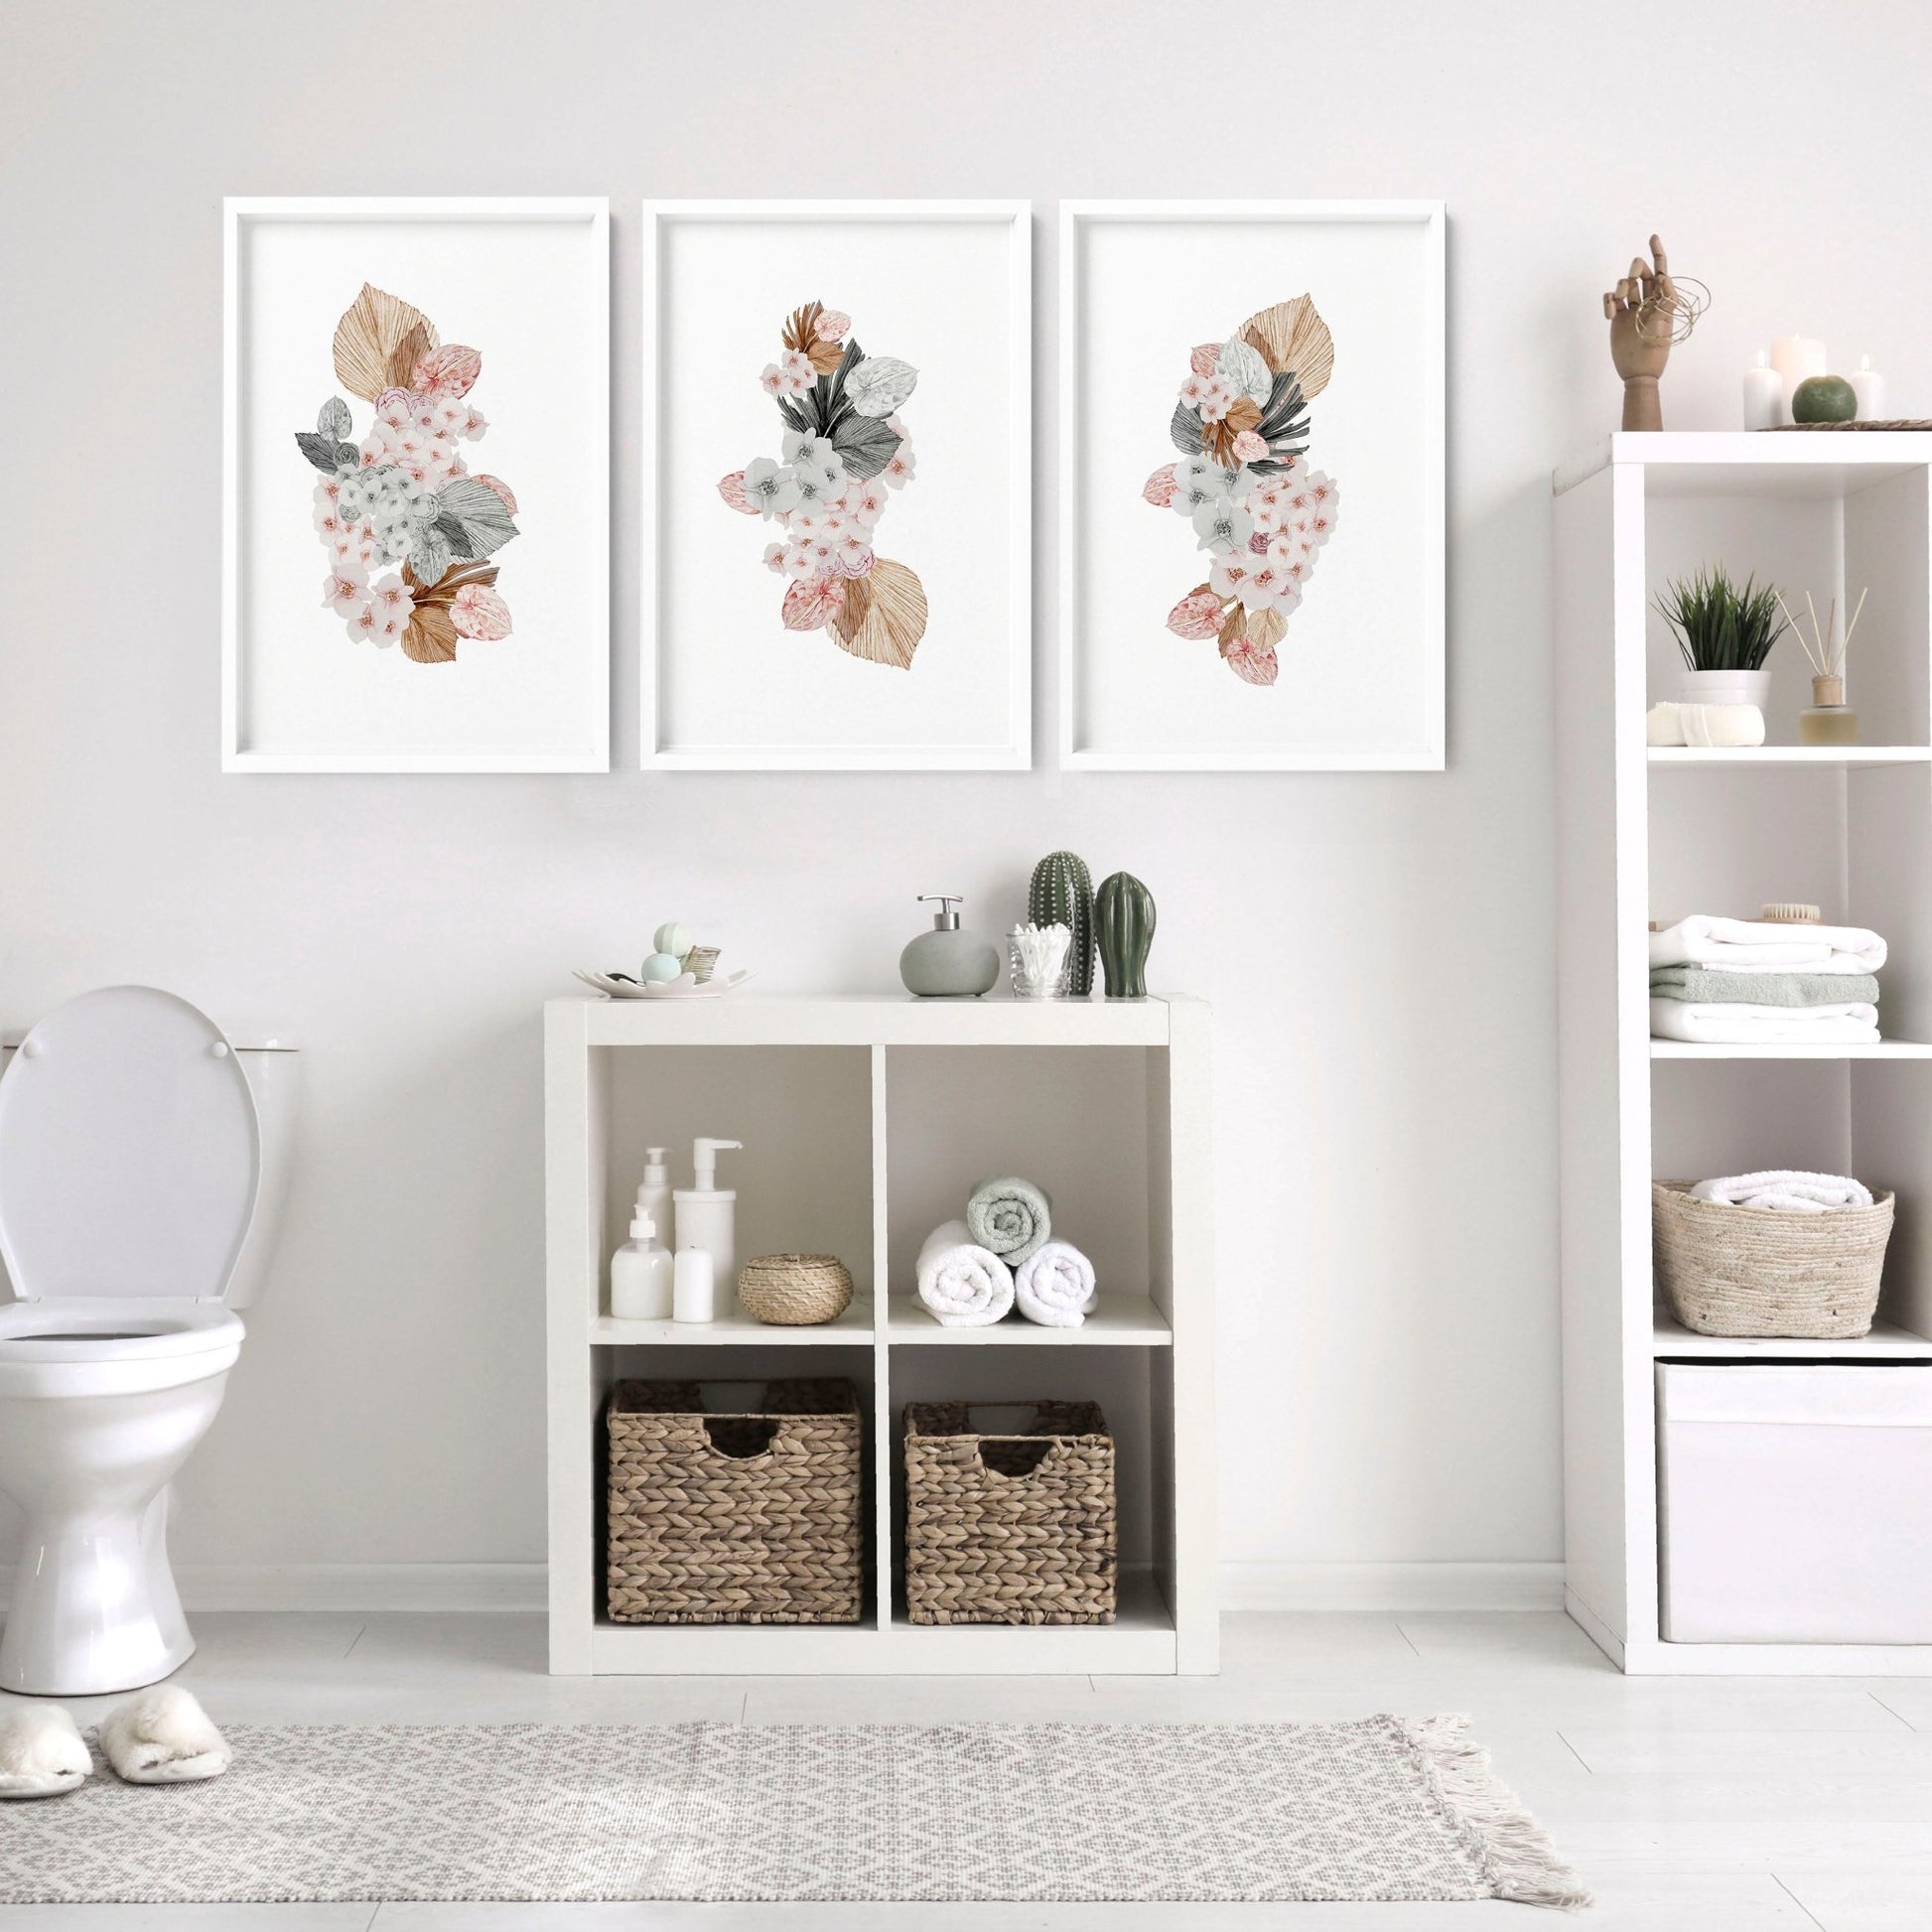 Blush Shabby Chic bathroom prints | set of 3 wall art - About Wall Art